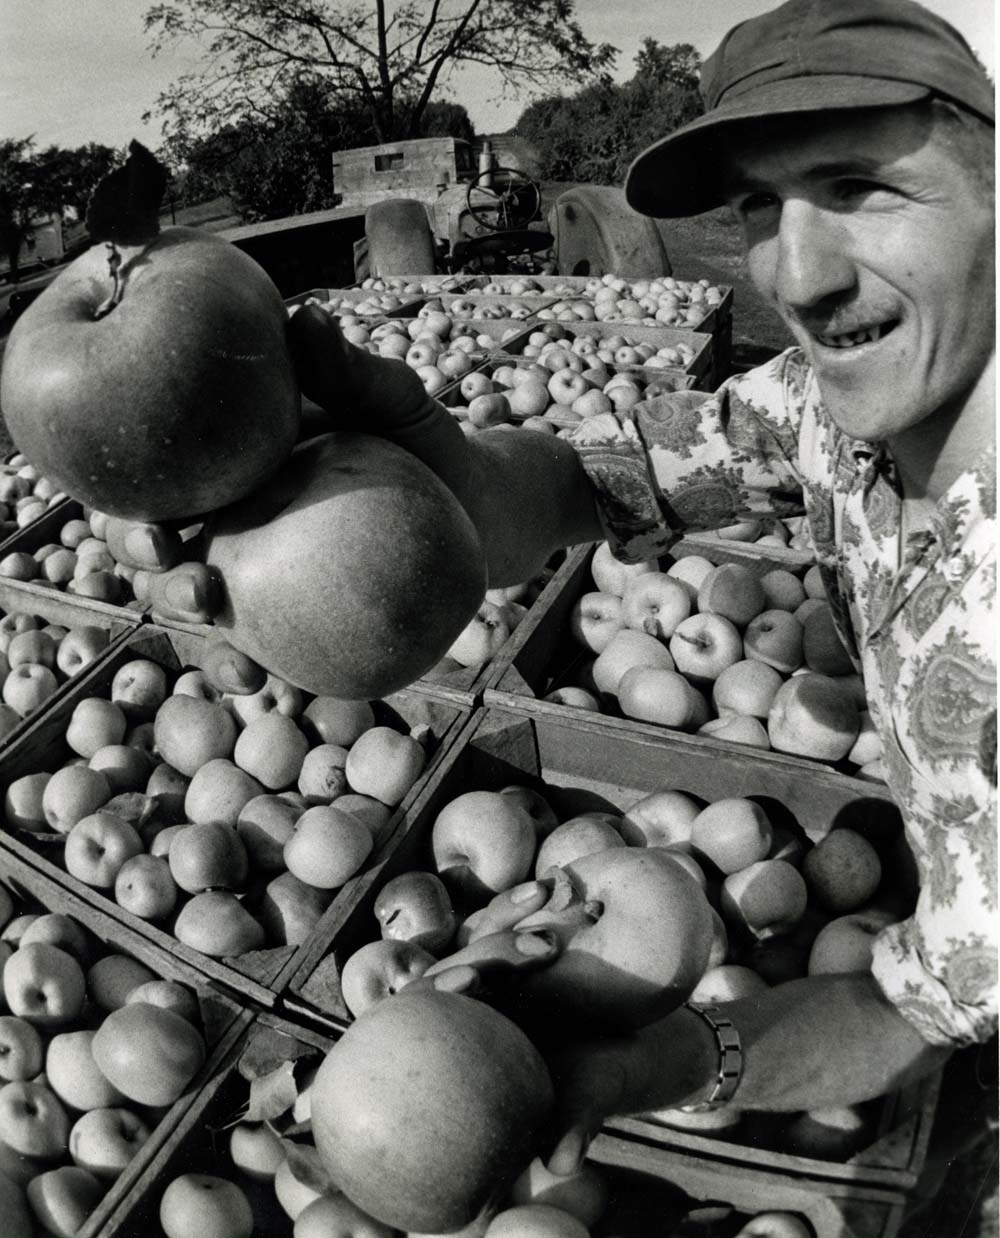 Harold Emlet Jr., Aspers - Loads Wagon w/ Apples in Orchard